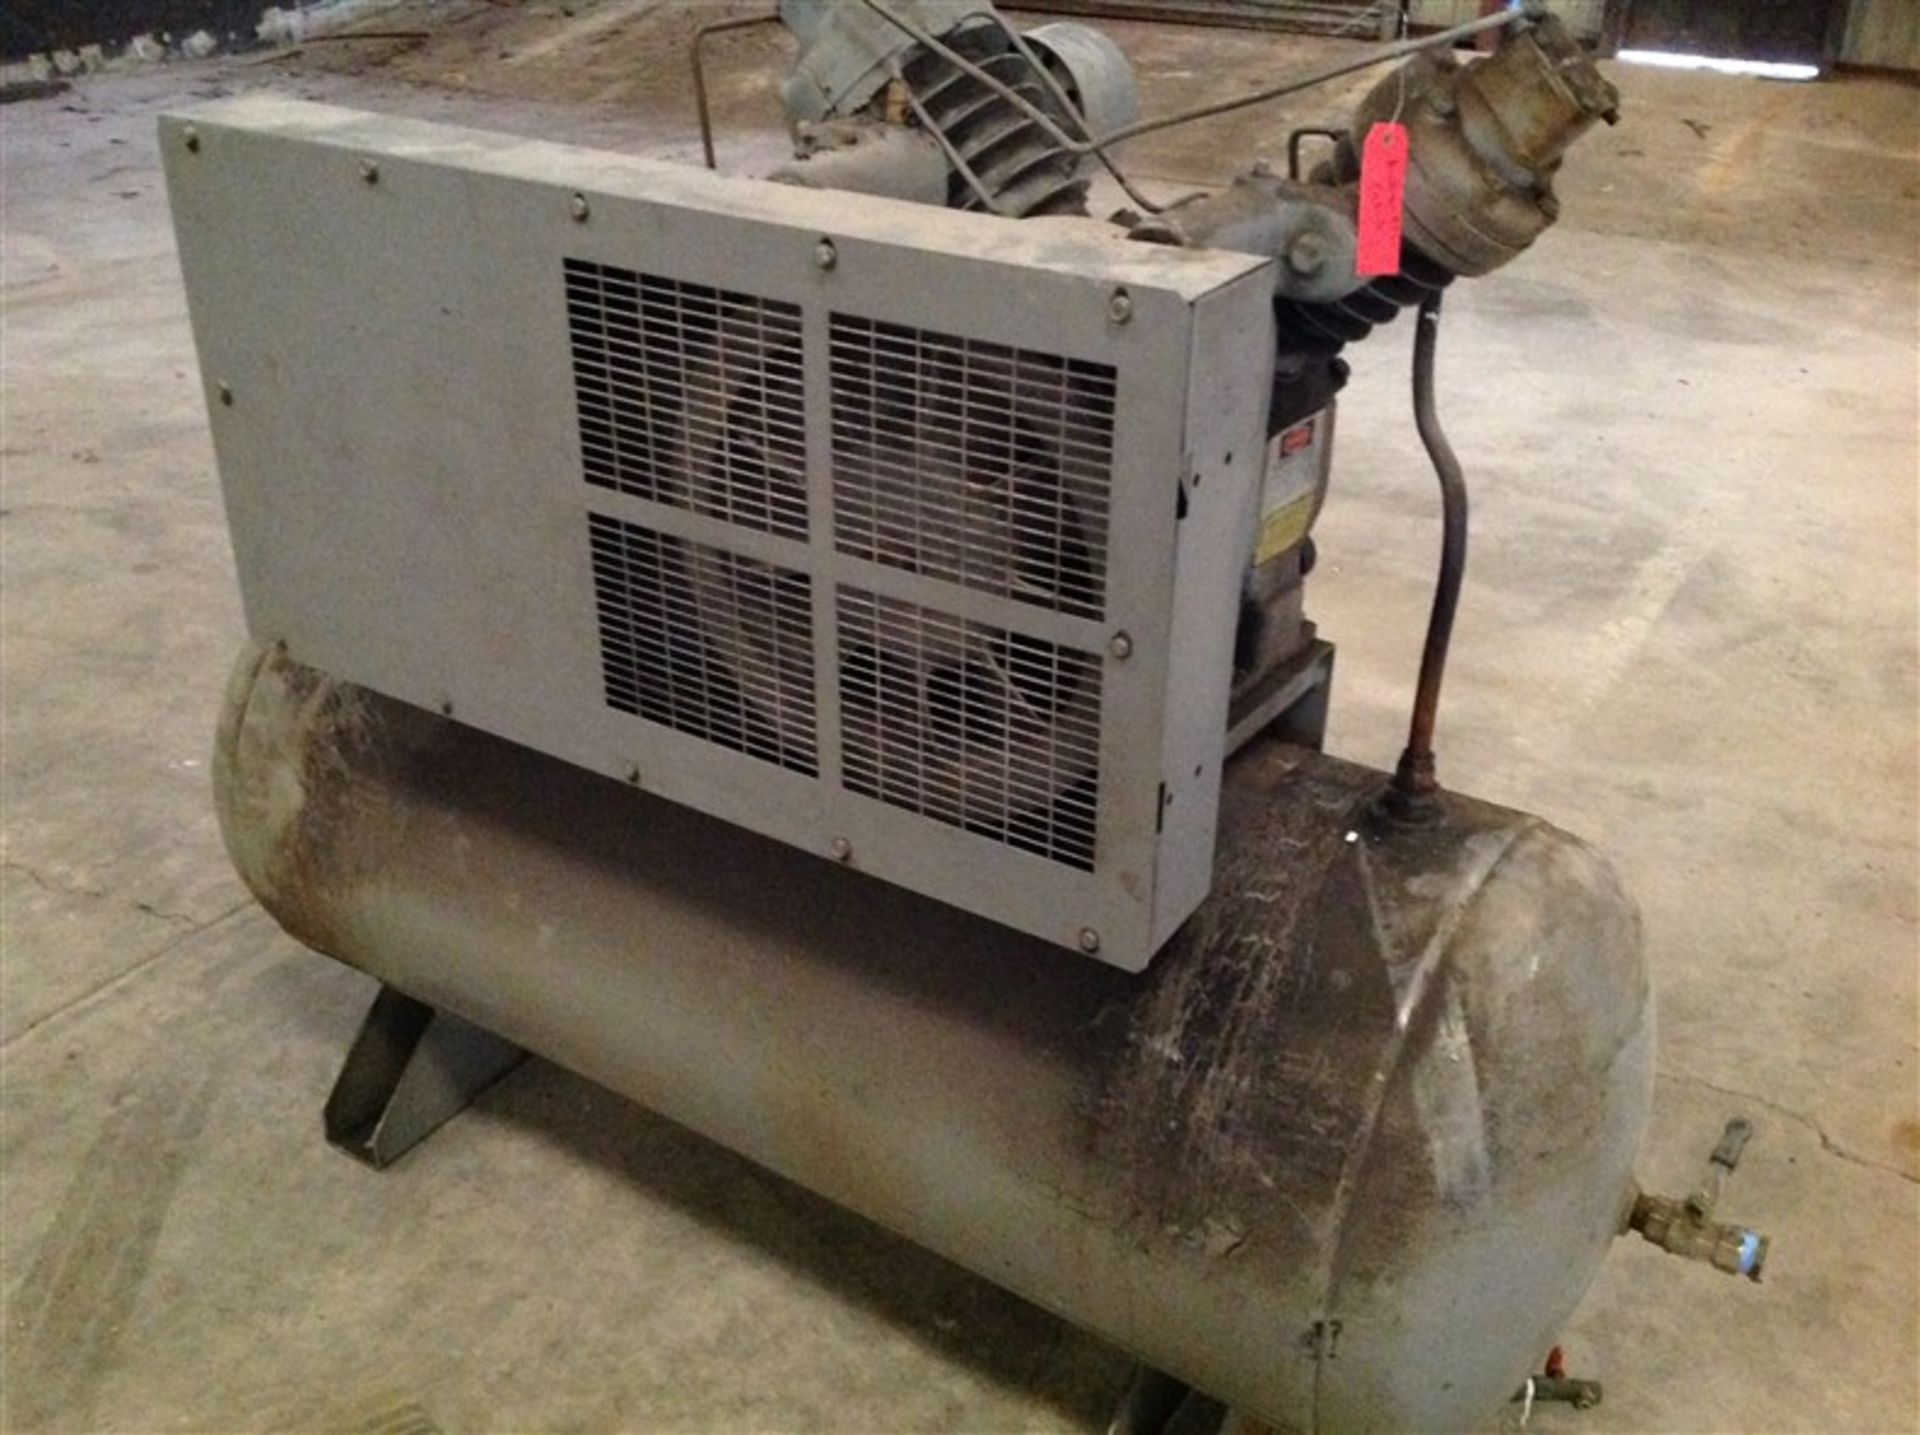 Ingersoll-Rand T30 (10HP) Air Compressor (71T2-10E) (1 x Your Bid) - Image 2 of 3